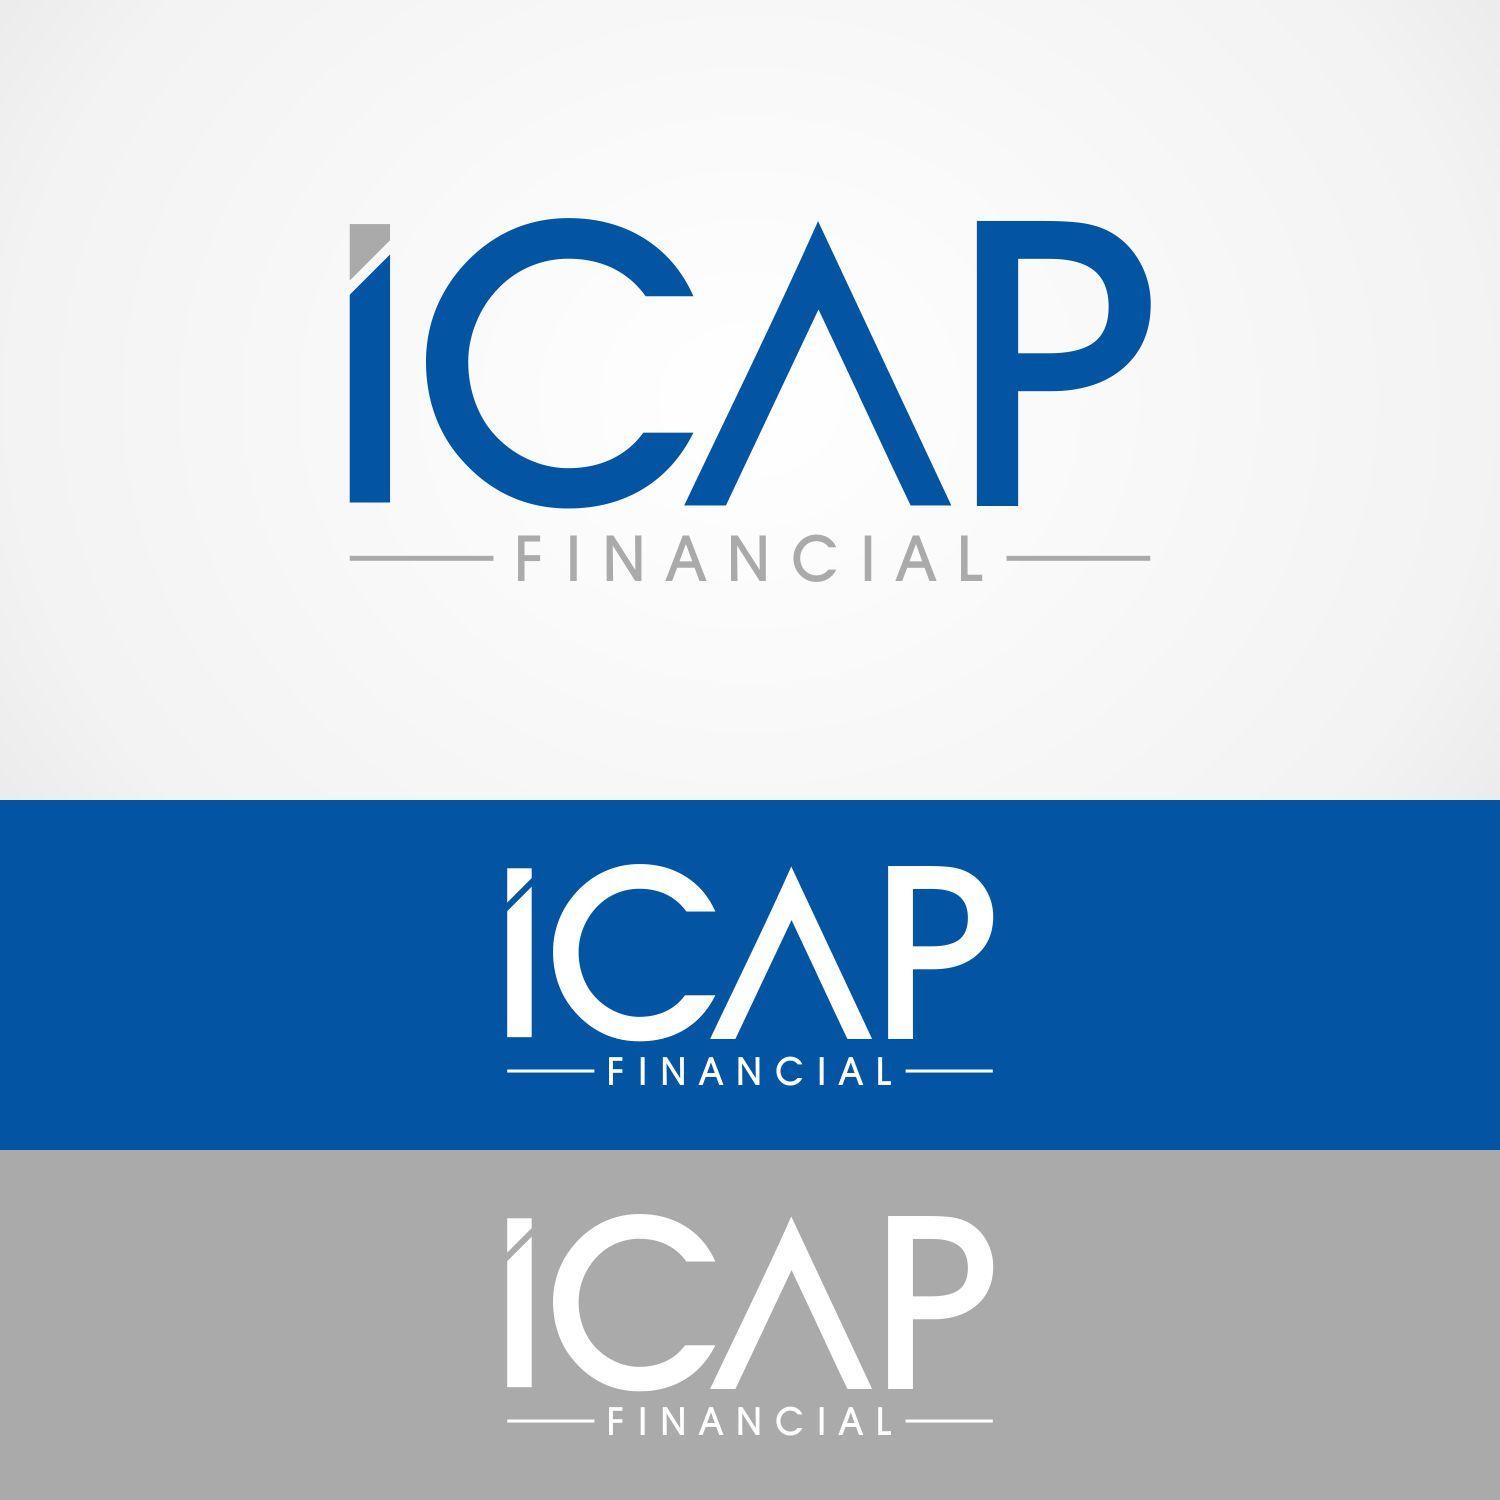 ICAP Logo - Professional, Masculine, Financial Logo Design for ICAP FINANCIAL ...